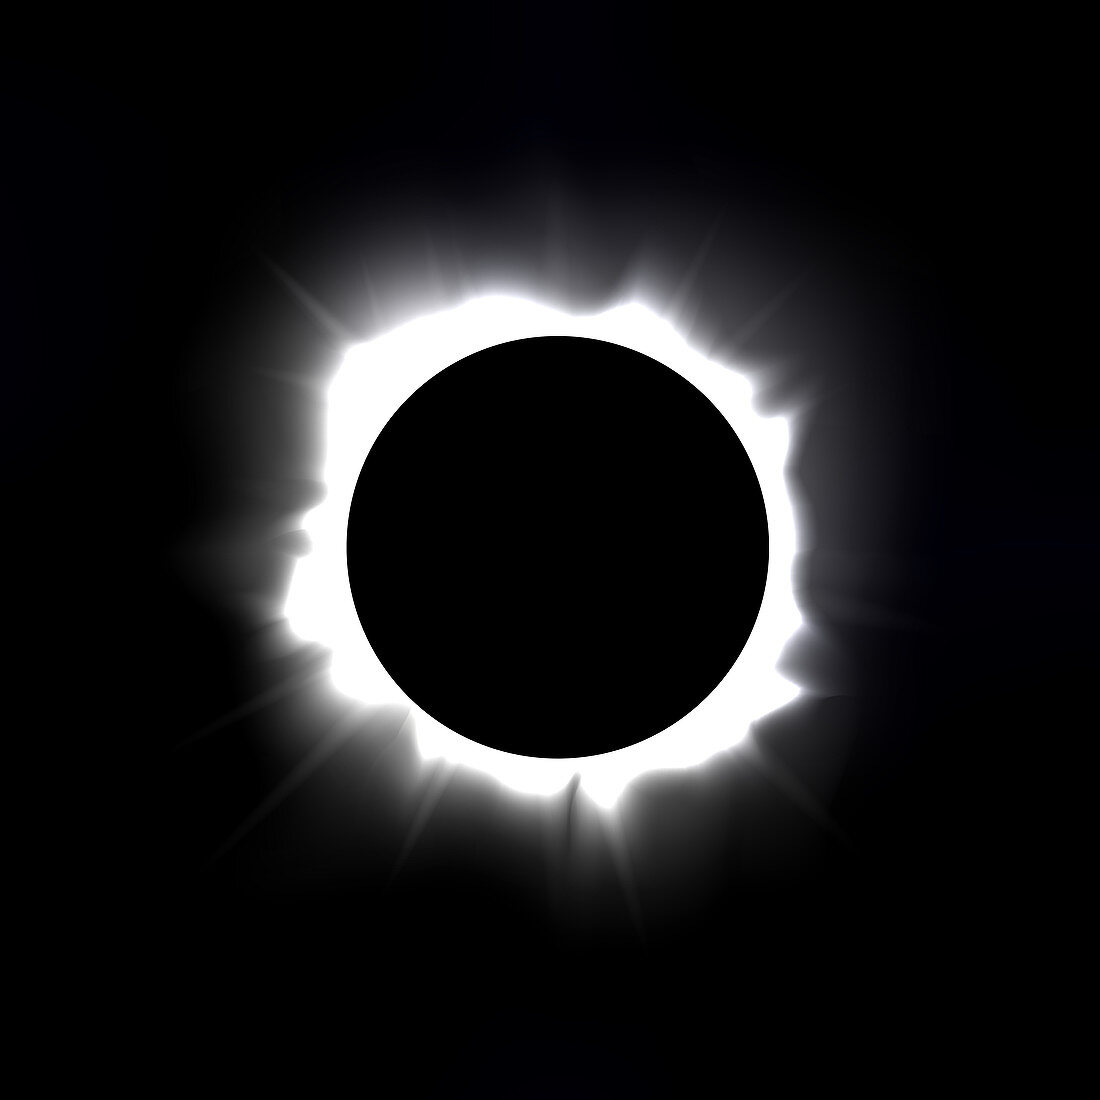 Total solar eclipse, illustration